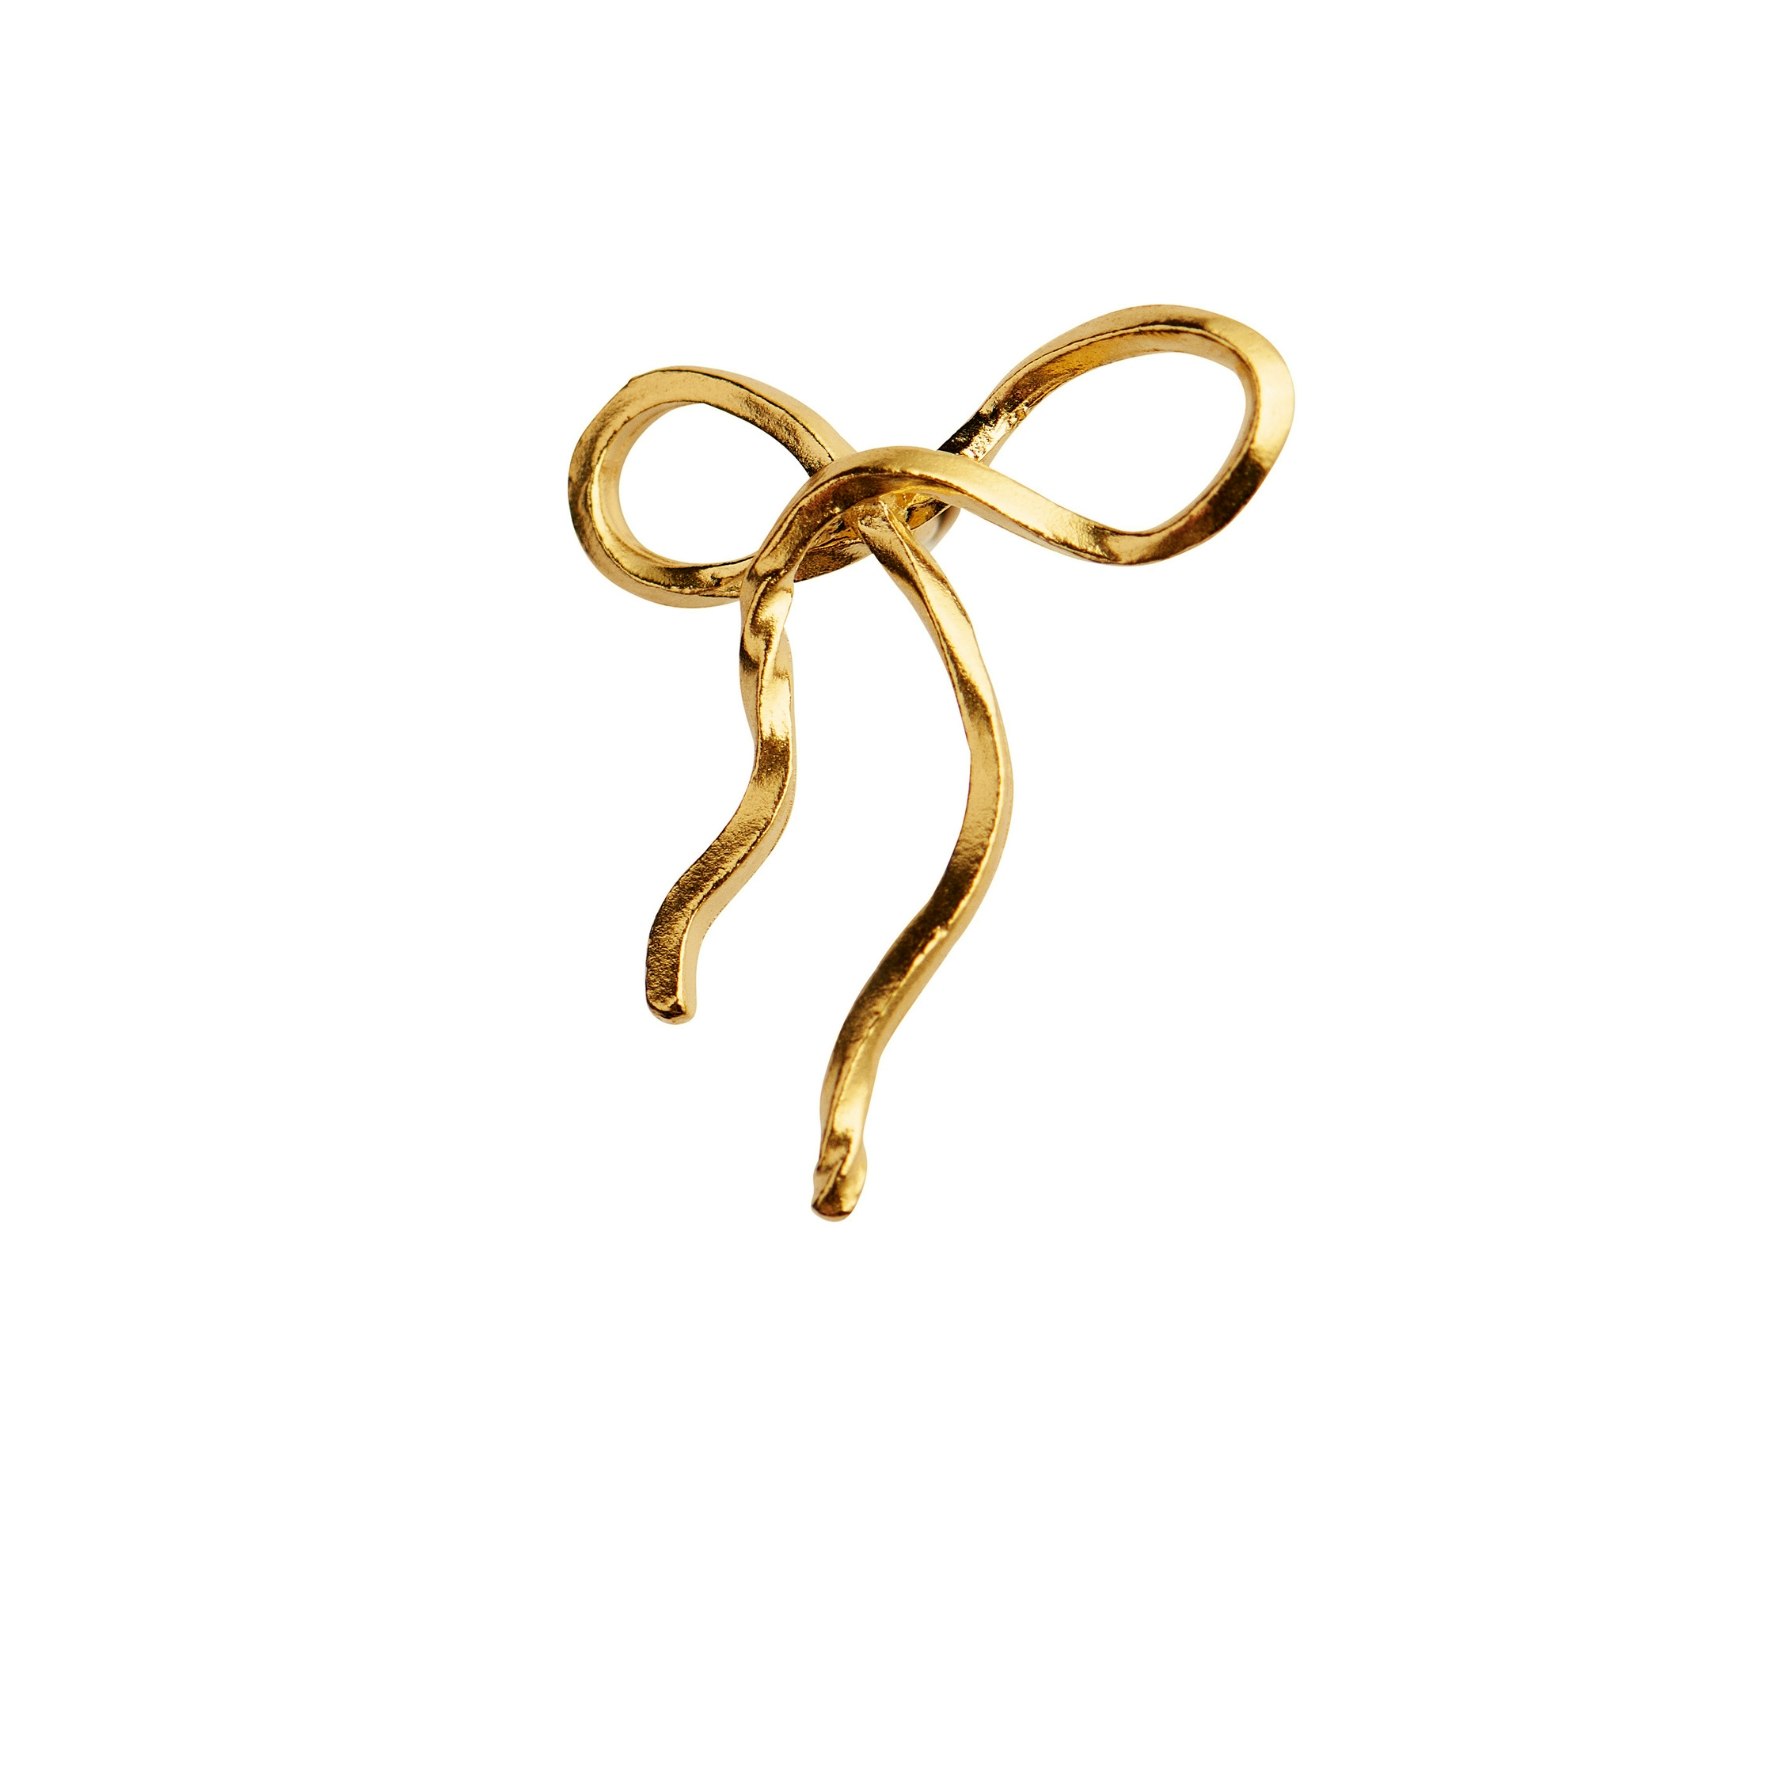 Flow Bow Earring fra STINE A Jewelry i Forgyldt-Sølv Sterling 925